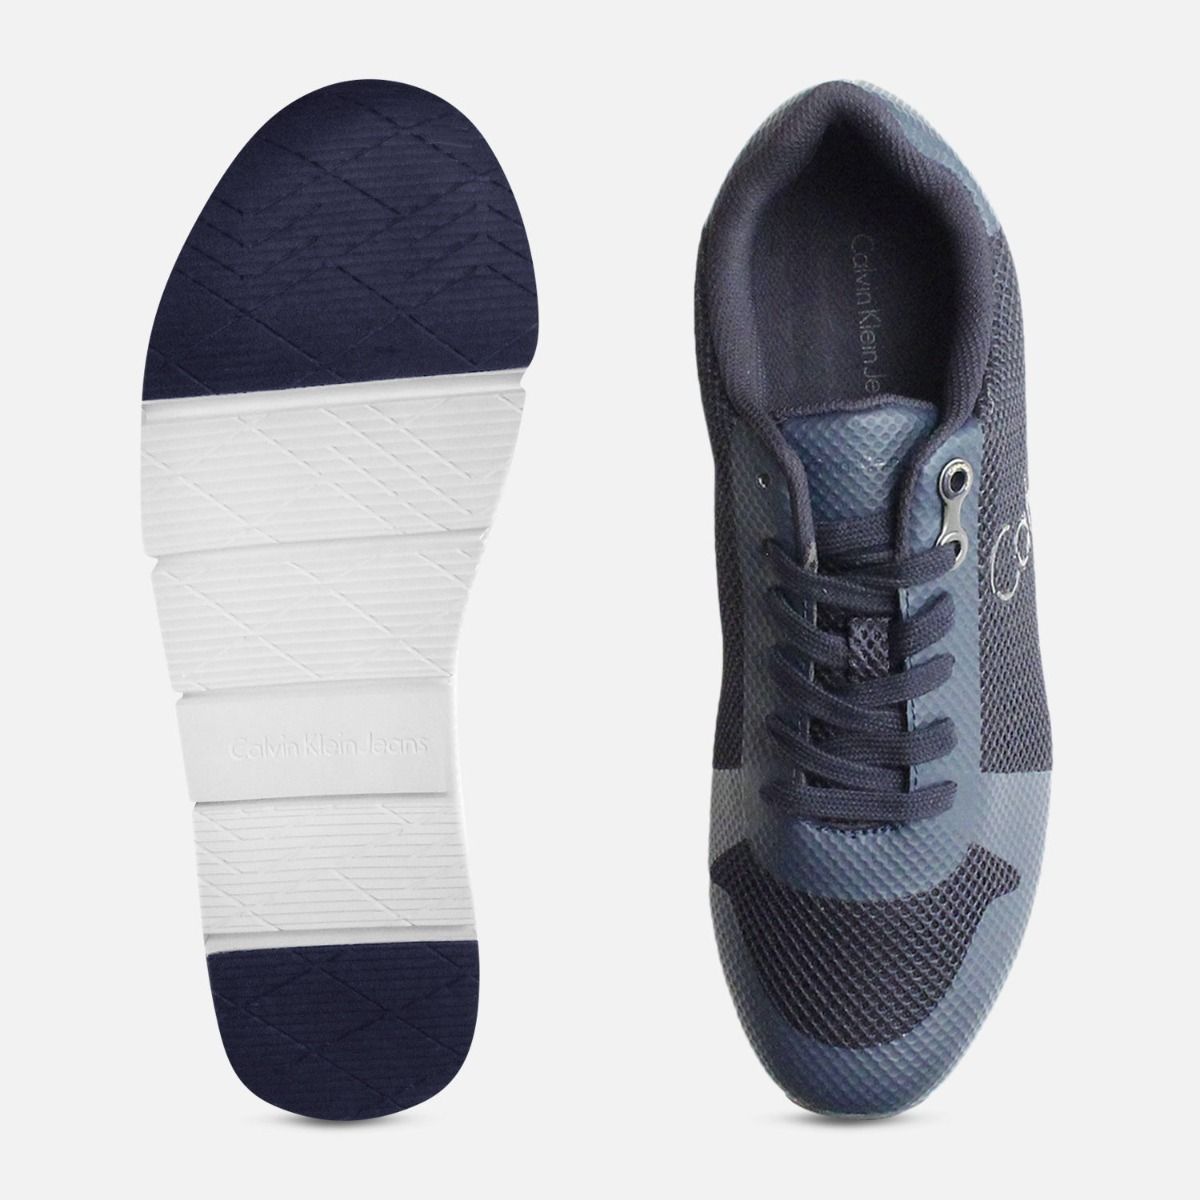 Navy Blue Calvin Klein Jacques Sneakers for Men